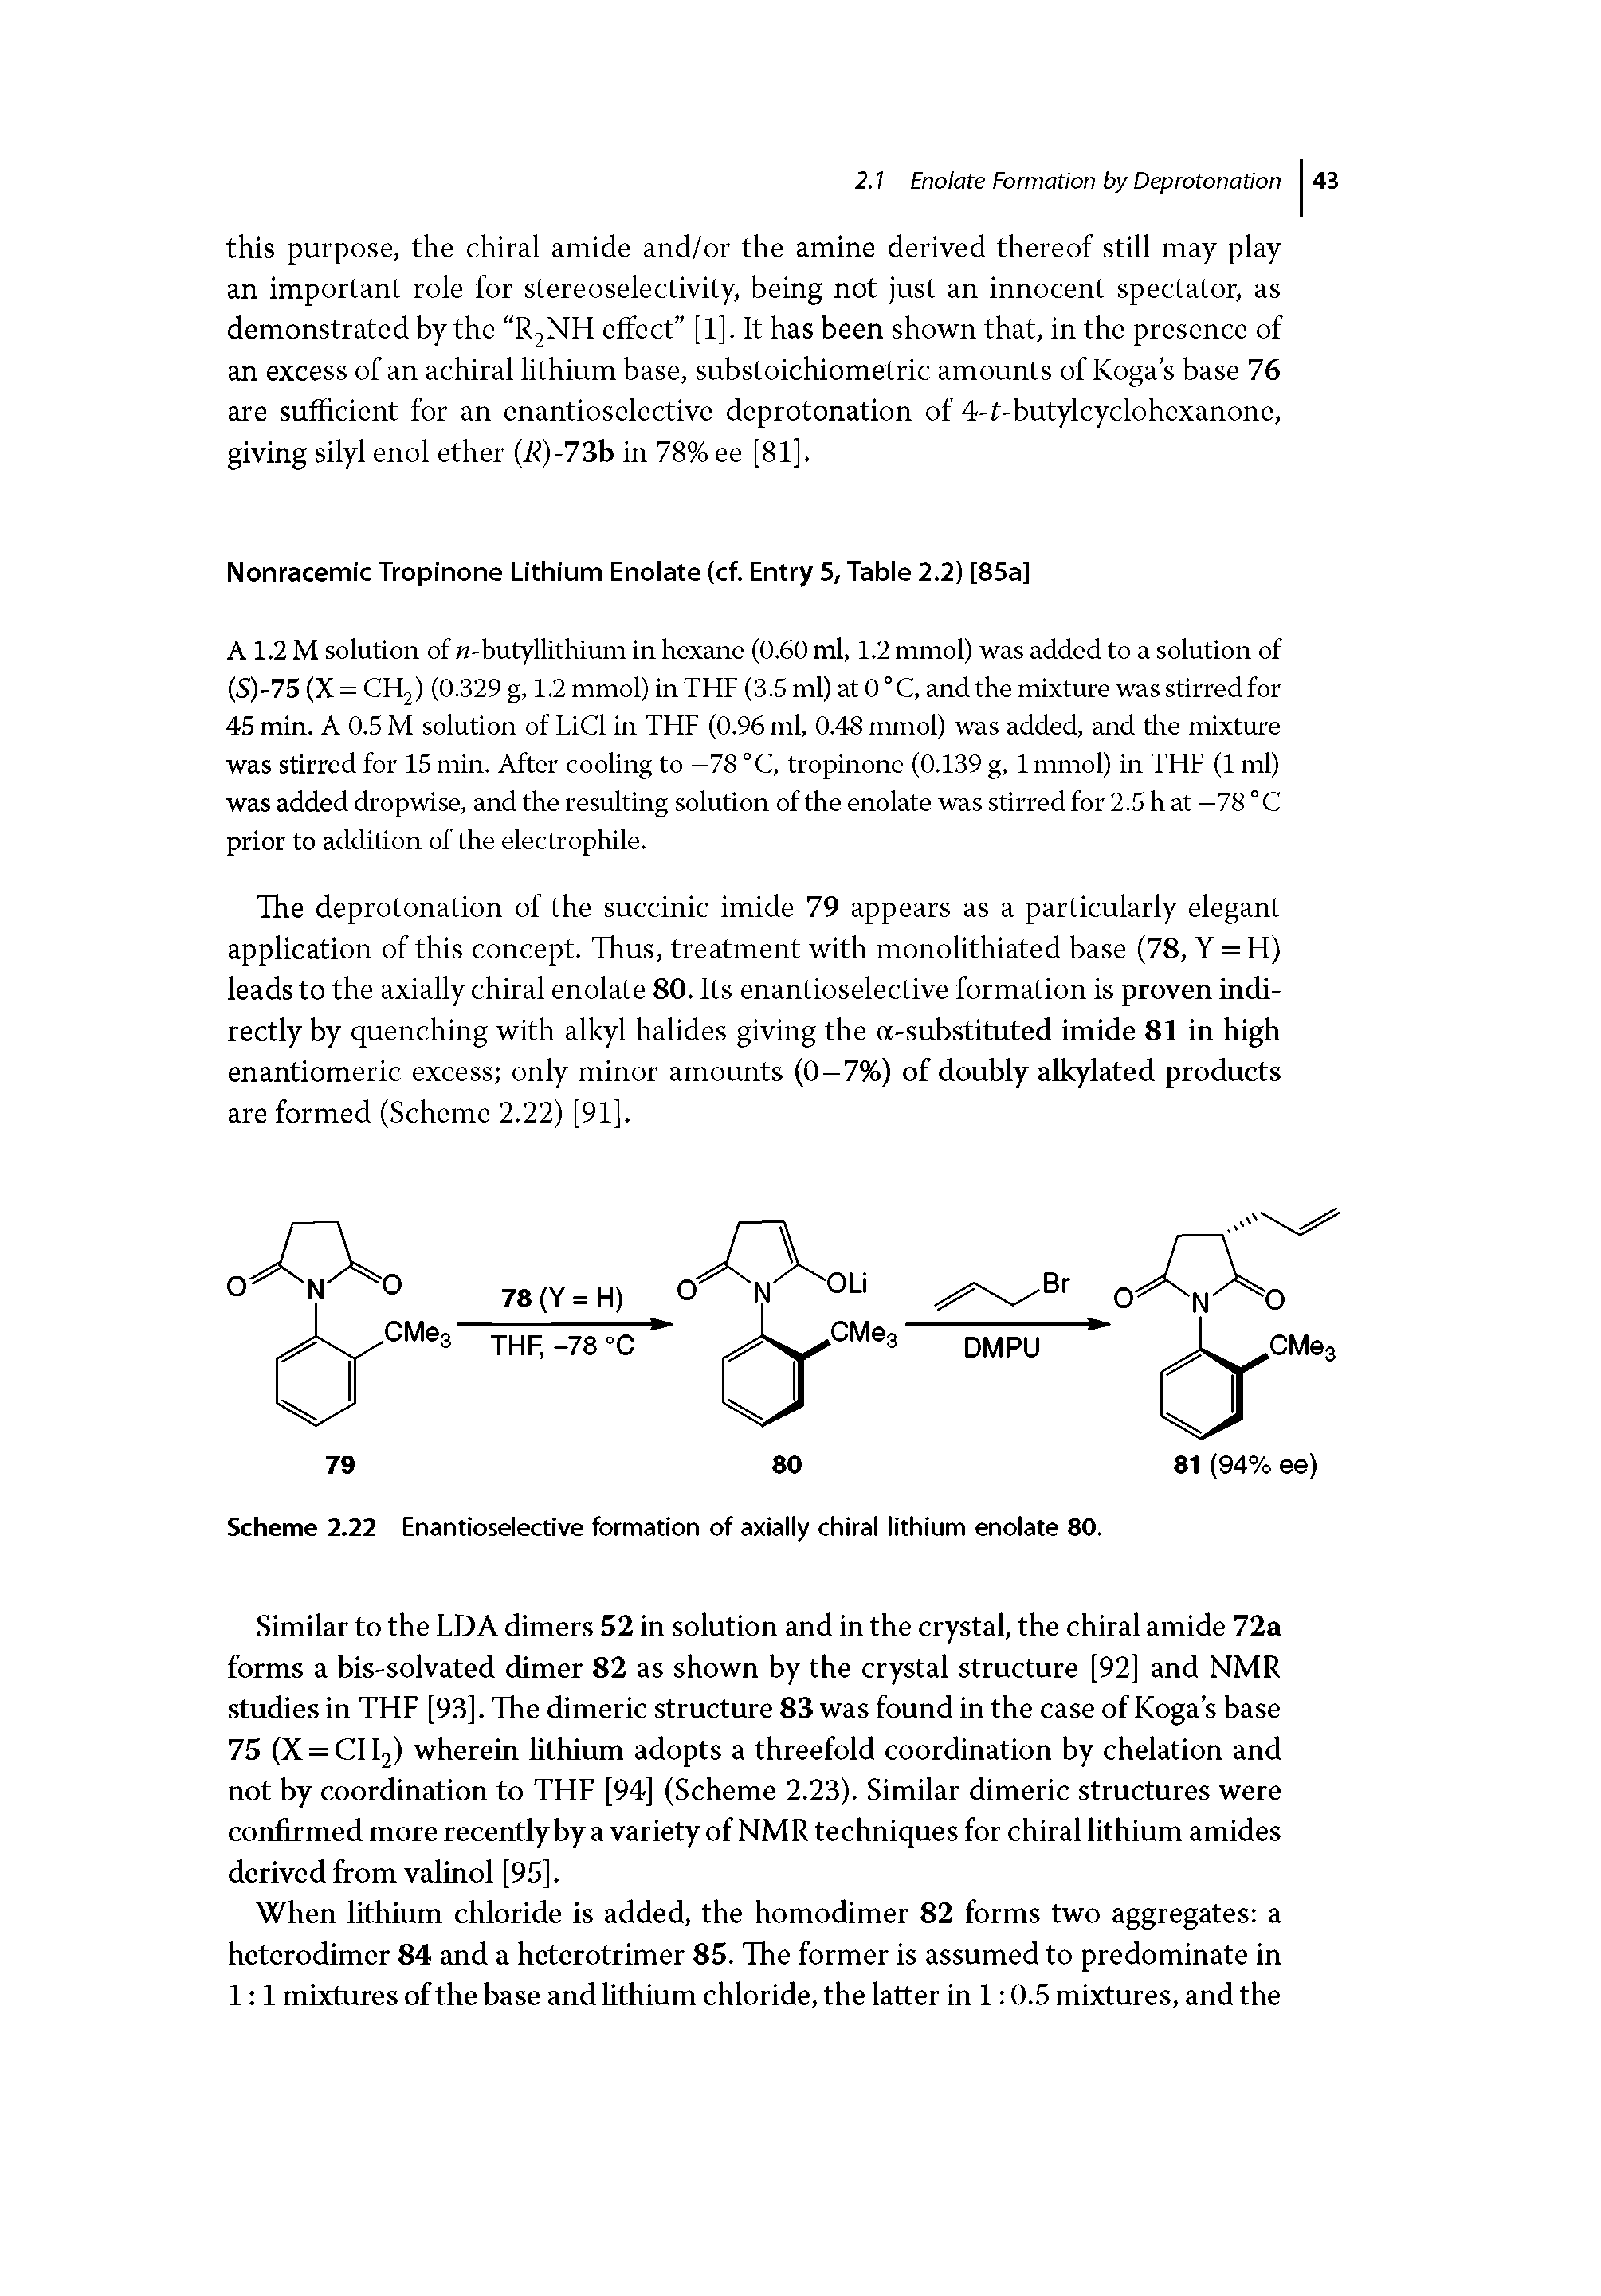 Scheme 2.22 Enantioselective formation of axially chiral lithium enolate 80.